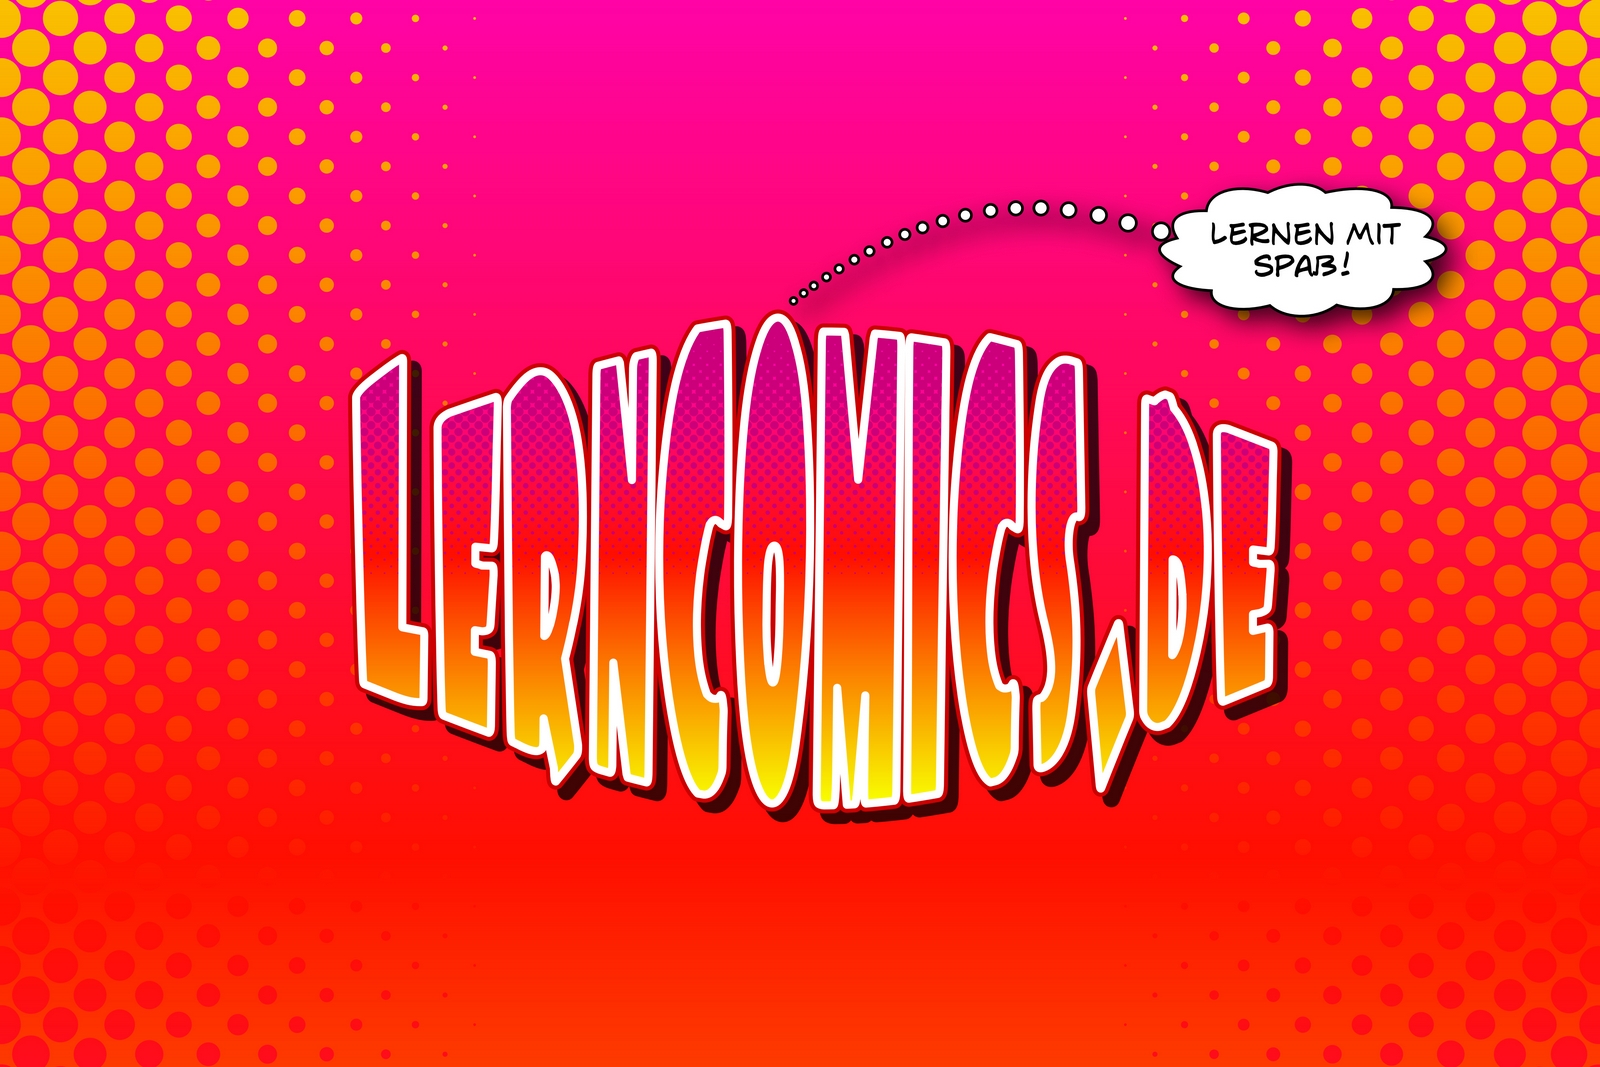 (c) Lerncomics.de